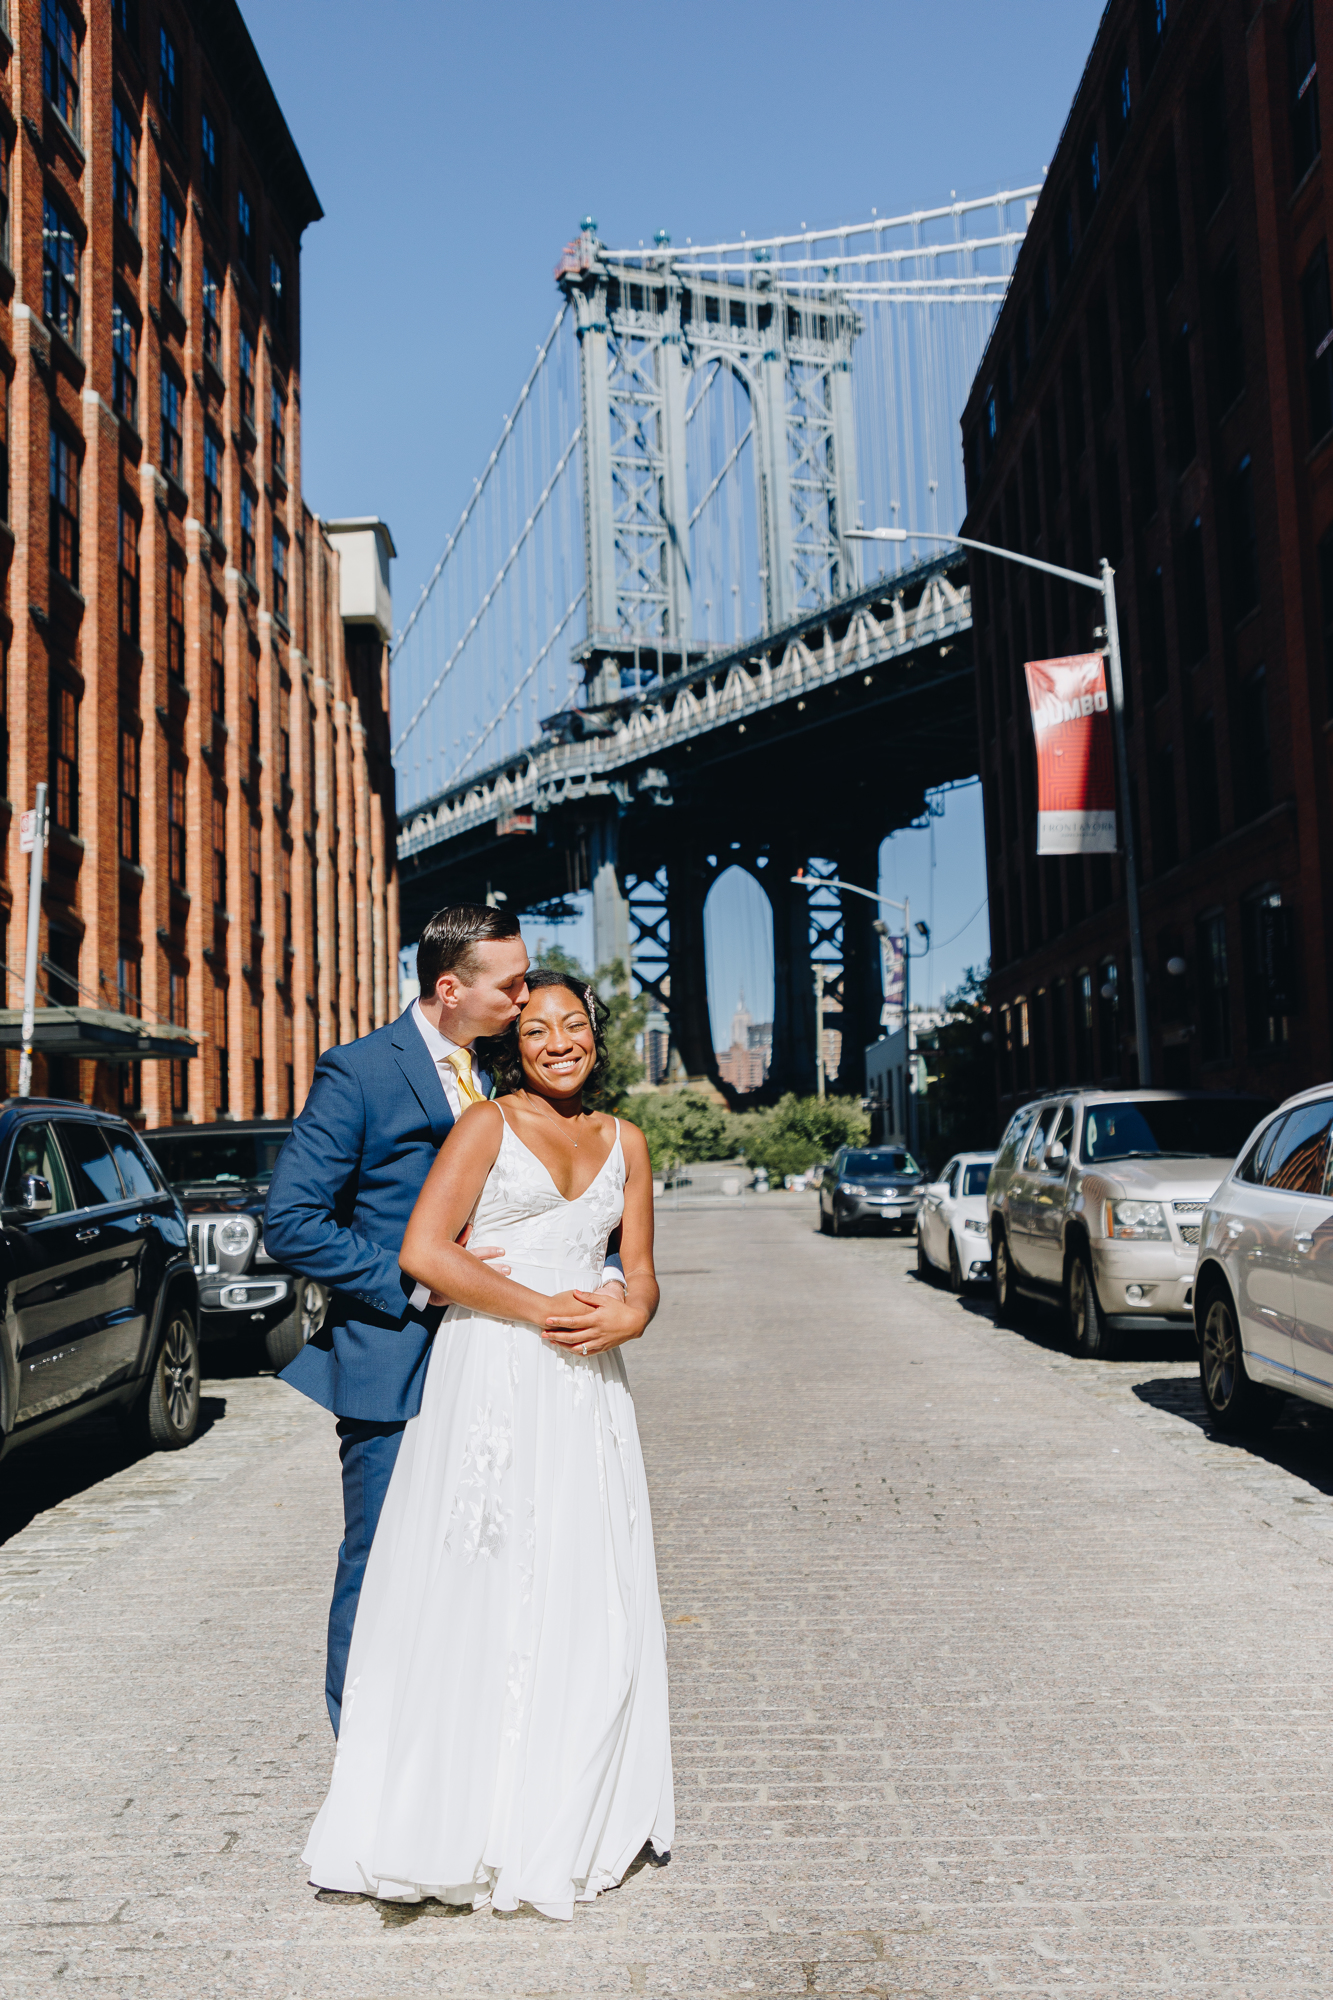 Romantic Elopement Photos in Dumbo, Brooklyn Bridge Park on Washington Street